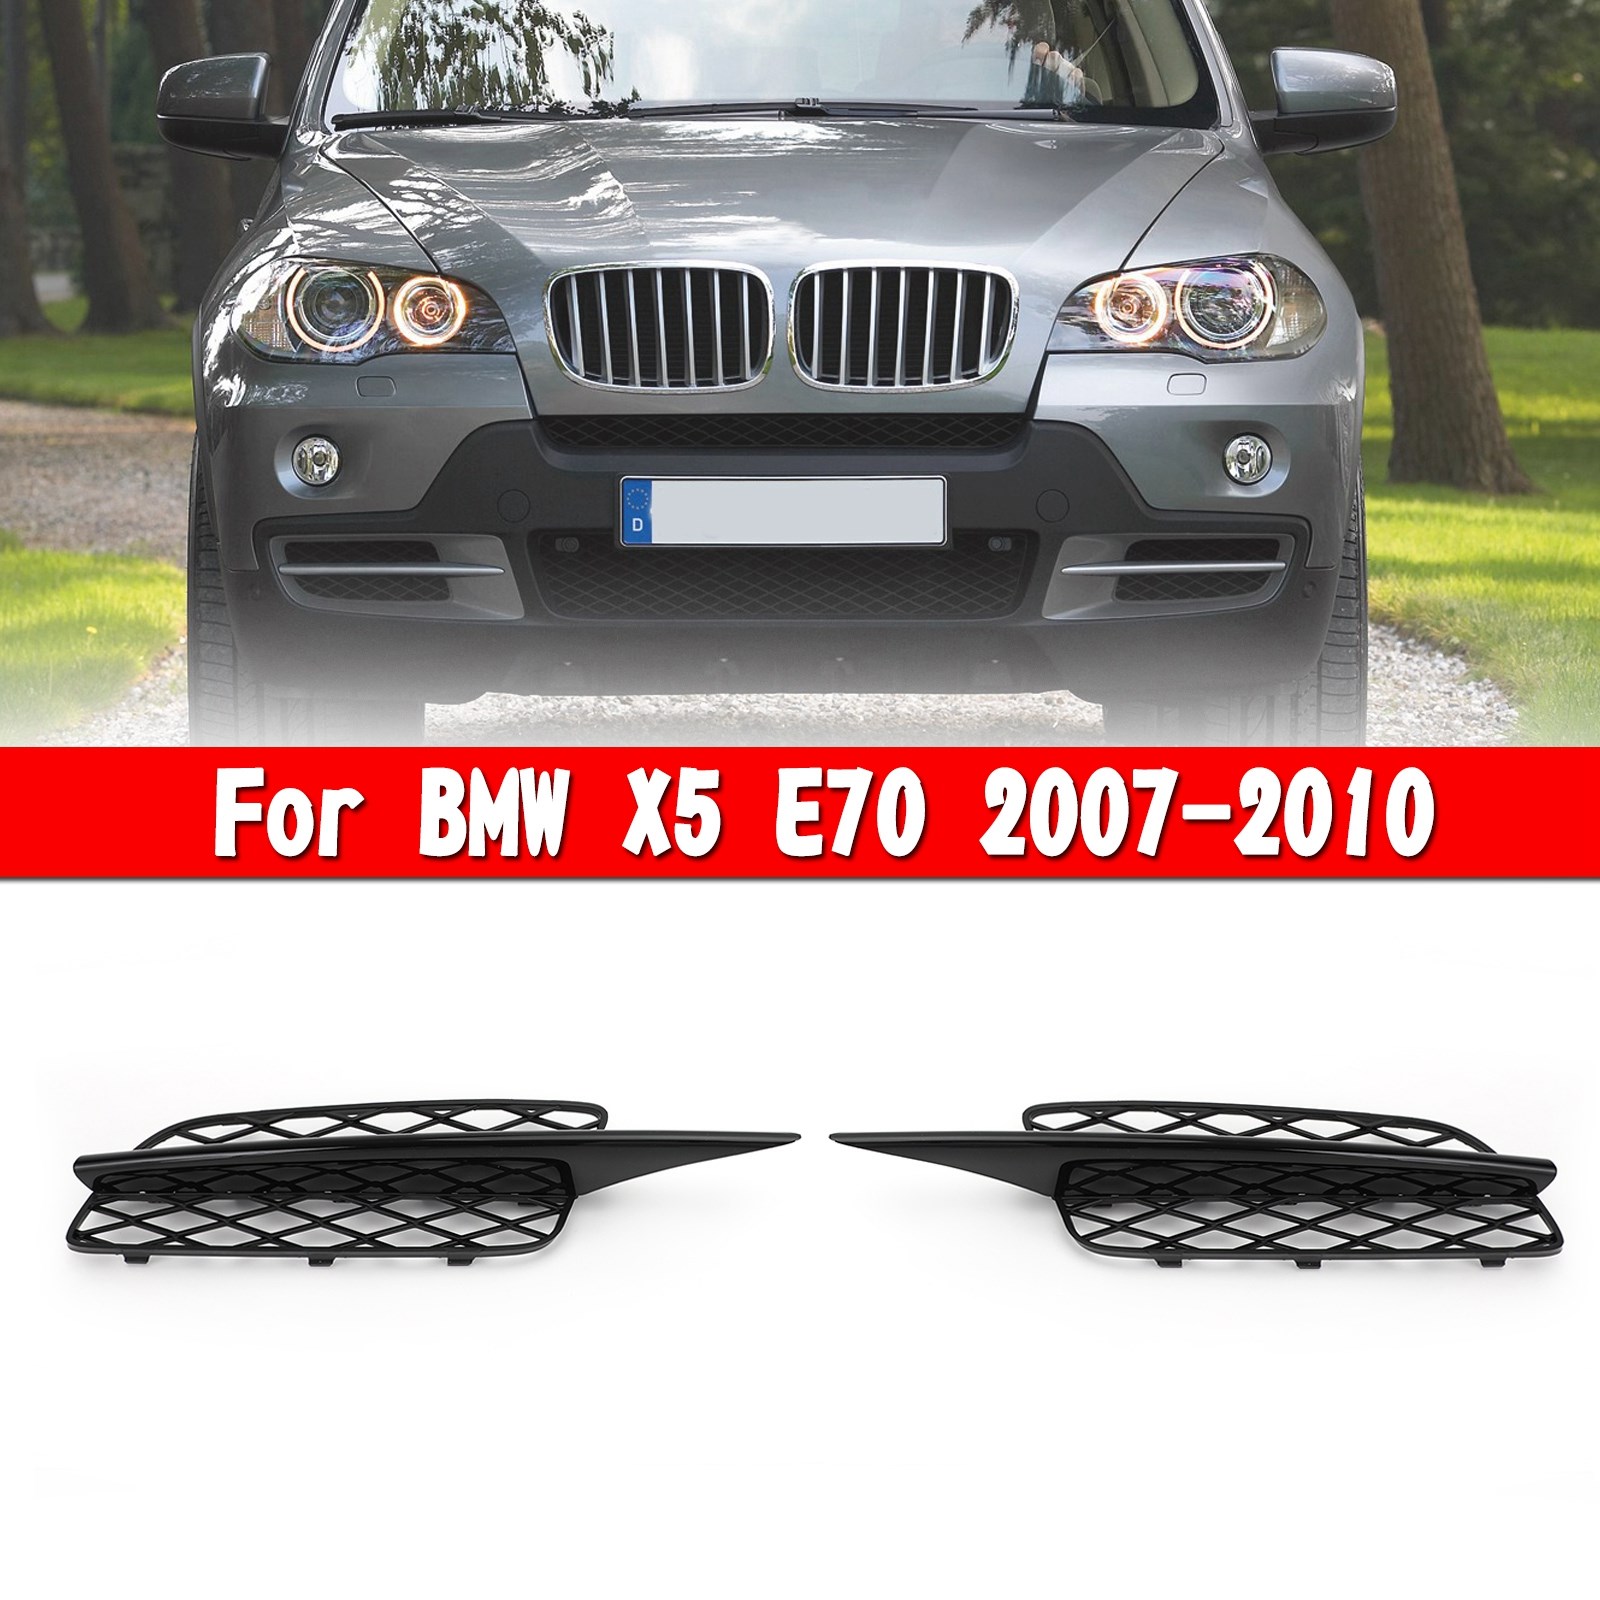 BMW X5 E70 2007-2010 改裝蜂窩狀前保桿進氣飾版-極限超快感